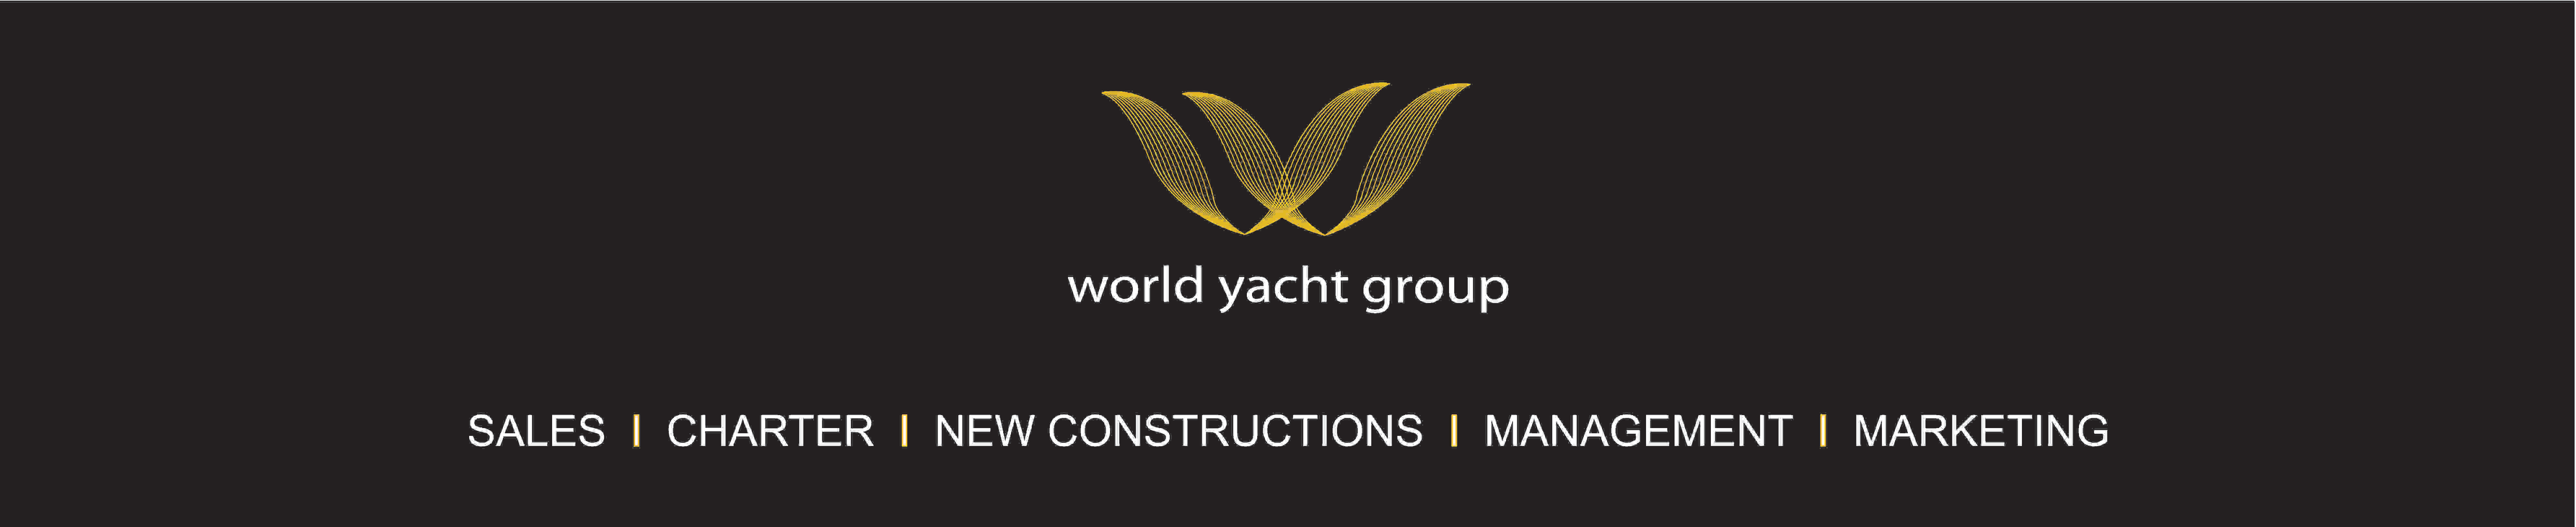 yachts-world-yacht-group